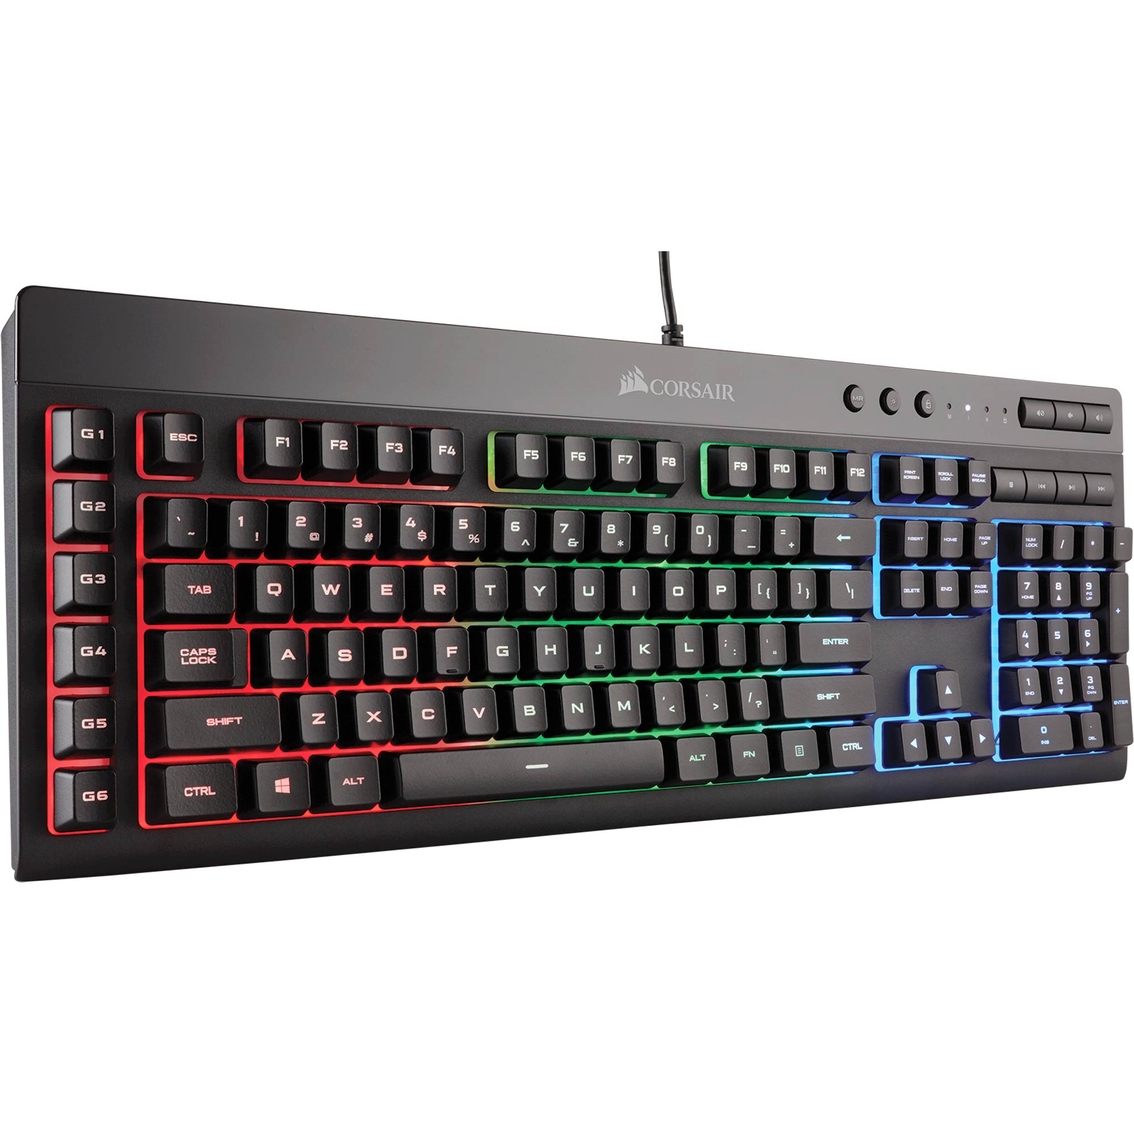 Corsair K55 Rgb Gaming Keyboard  Computer Gadgets & Accessories